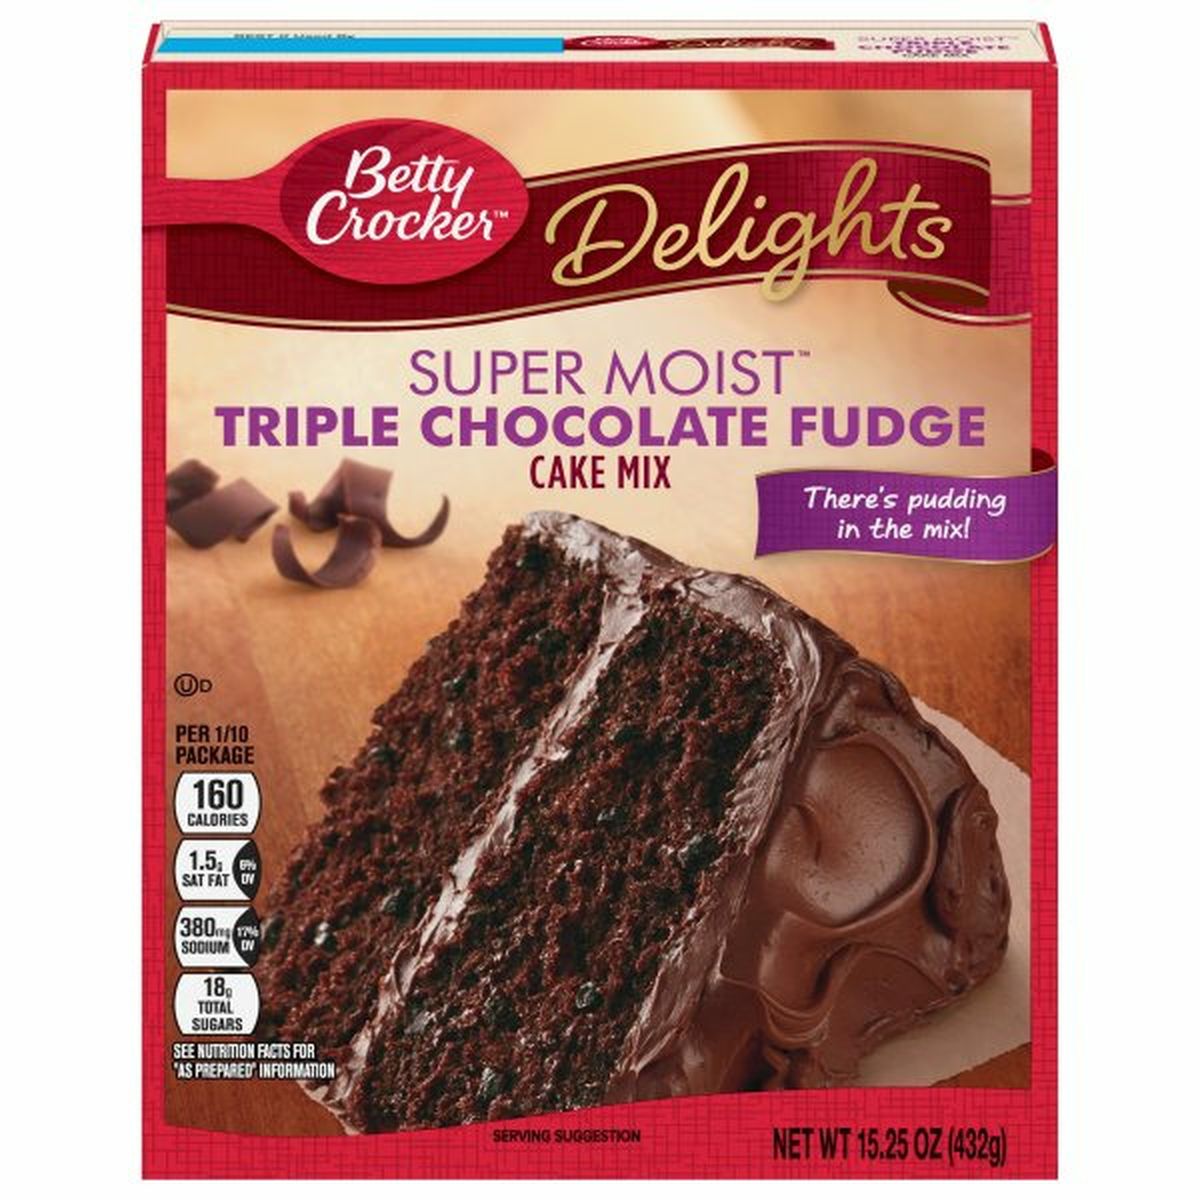 Calories in Betty Crocker Super Moist Cake Mix, Triple Chocolate Fudge, Delights